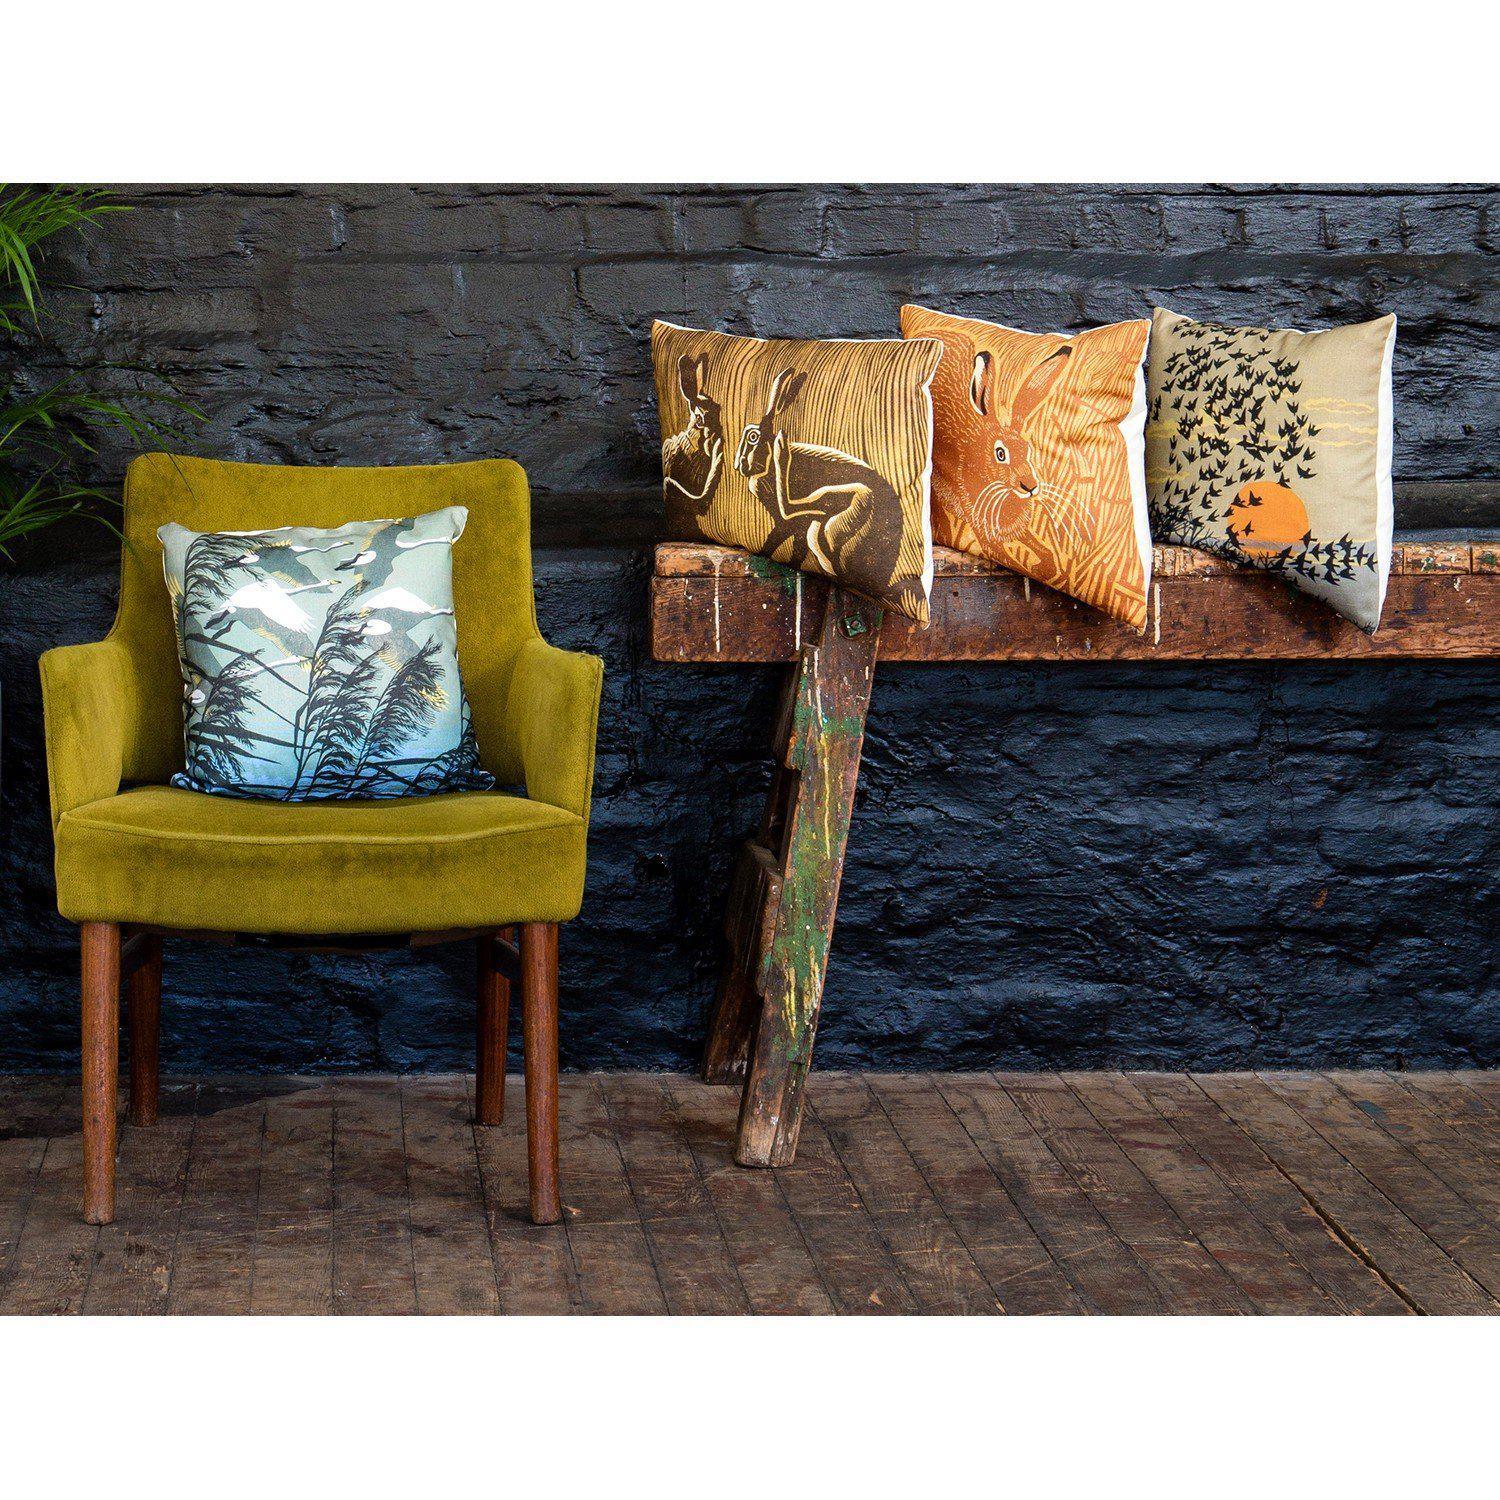 Snipe - Robert Gillmor Cushion - Handmade Cushions UK - WeLoveCushions